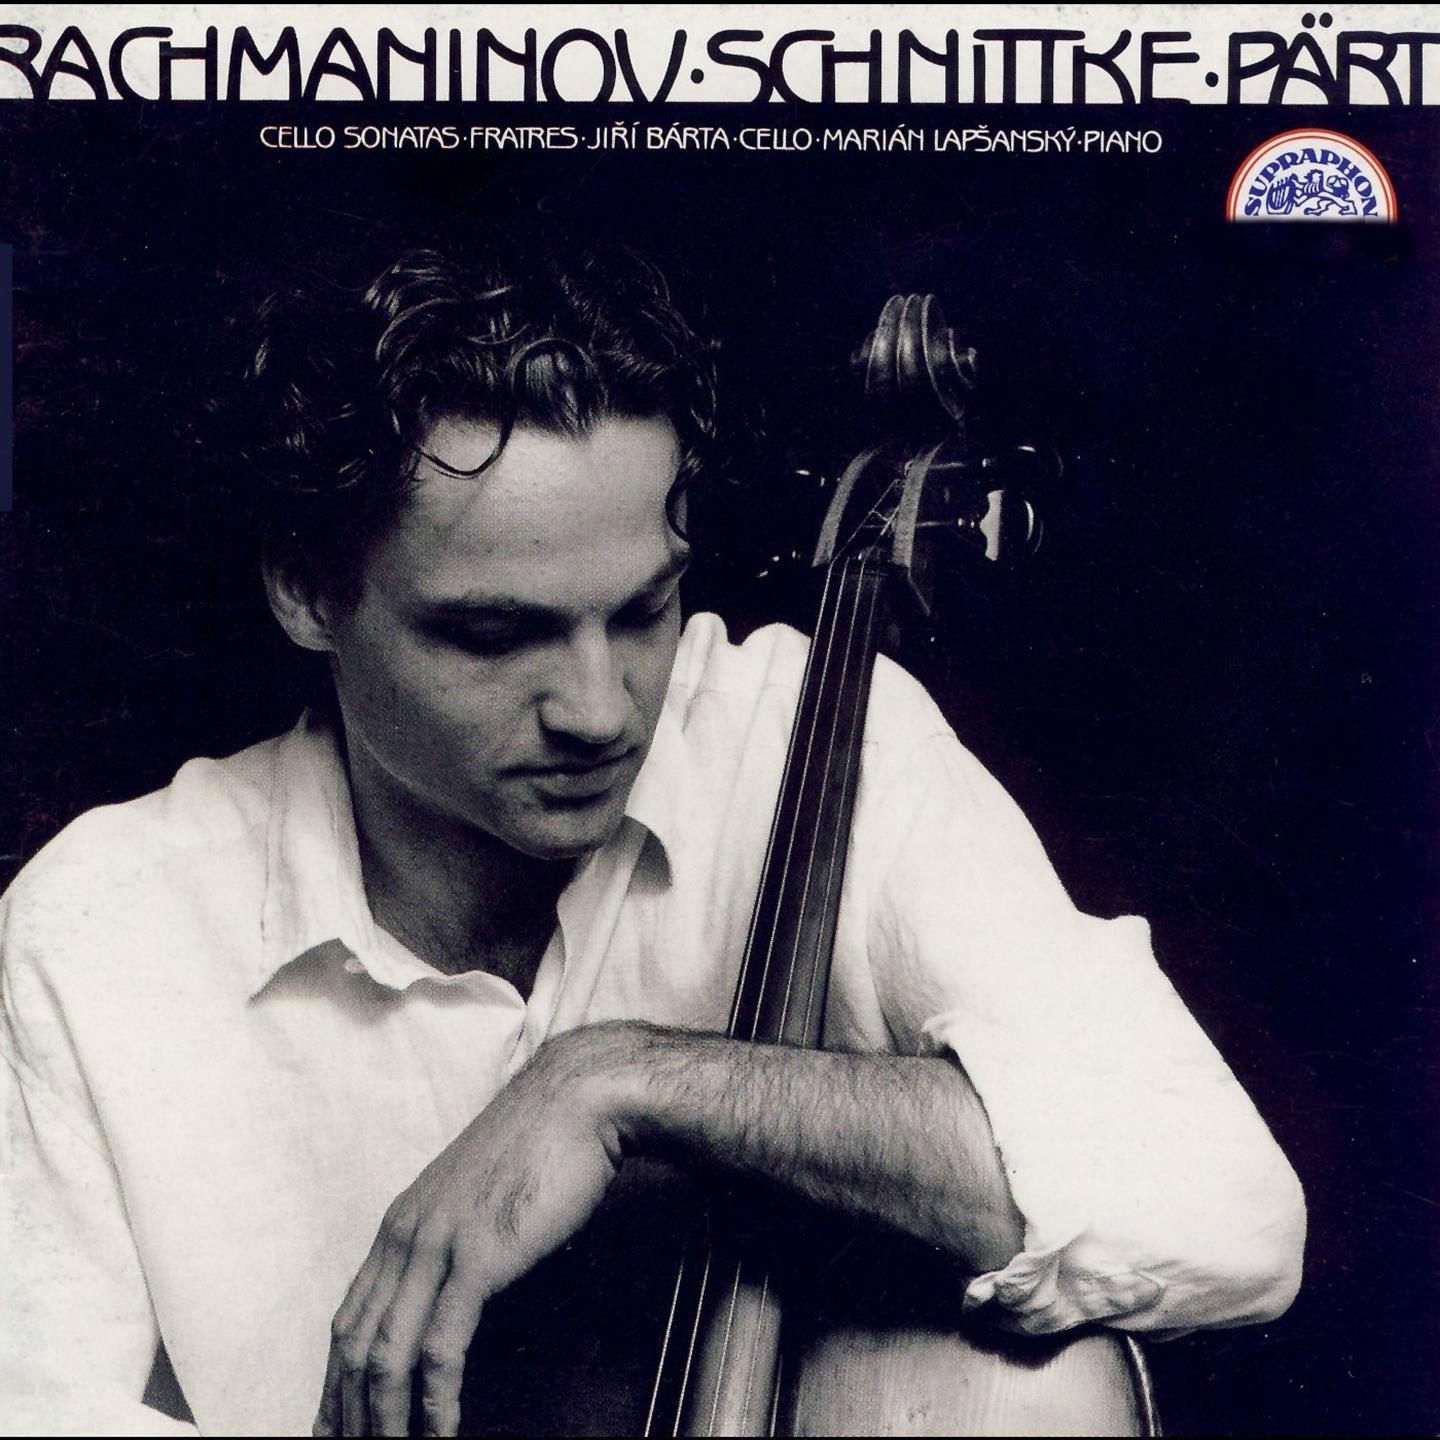 Rachmaninov, Schnittke, P rt: Cello Sonatas